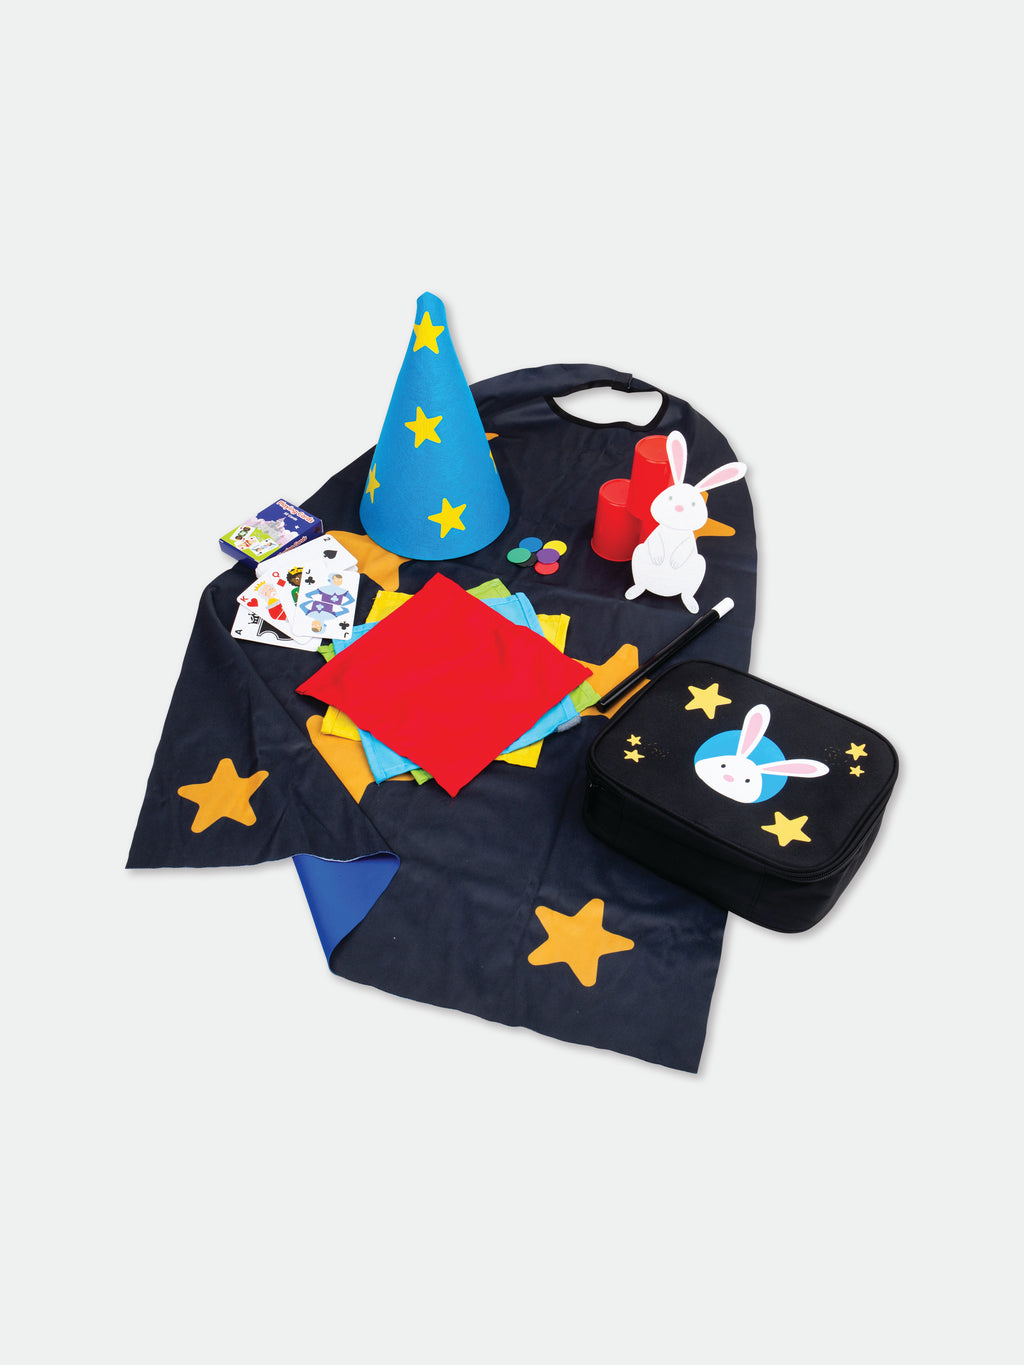 Multicolor wizard kit for kids